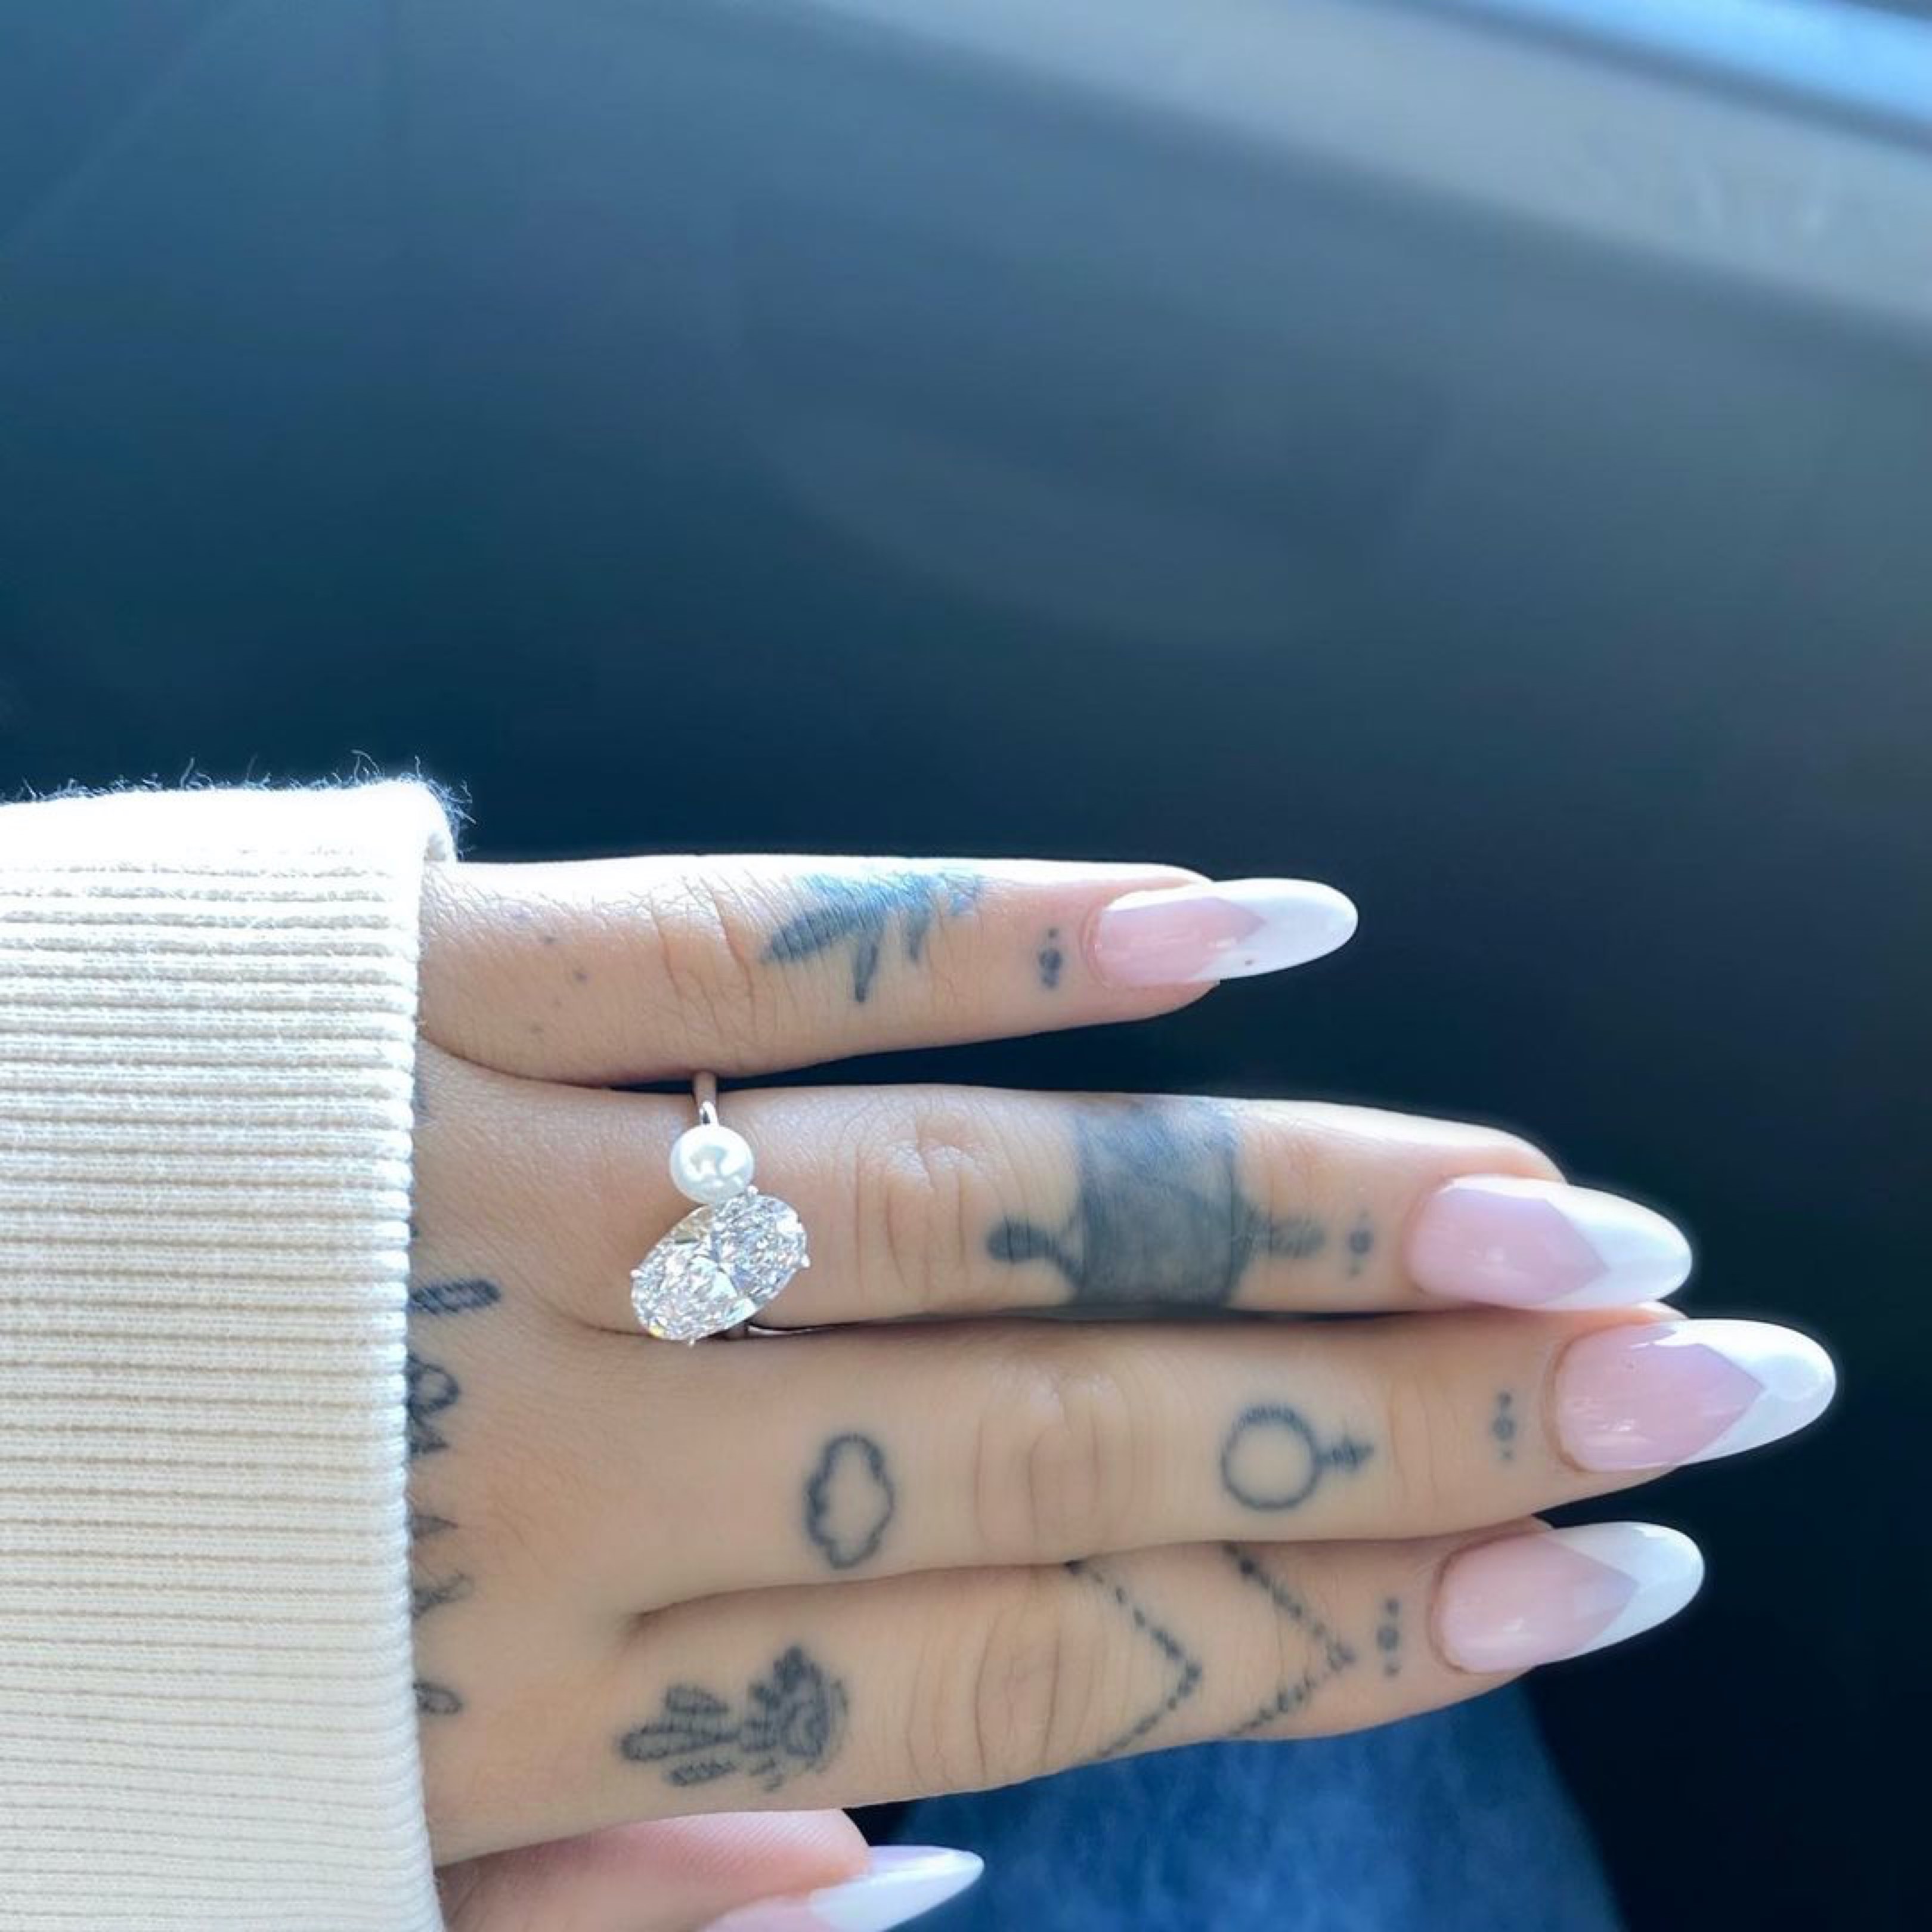 Ariana Grande's Engagement Ring 